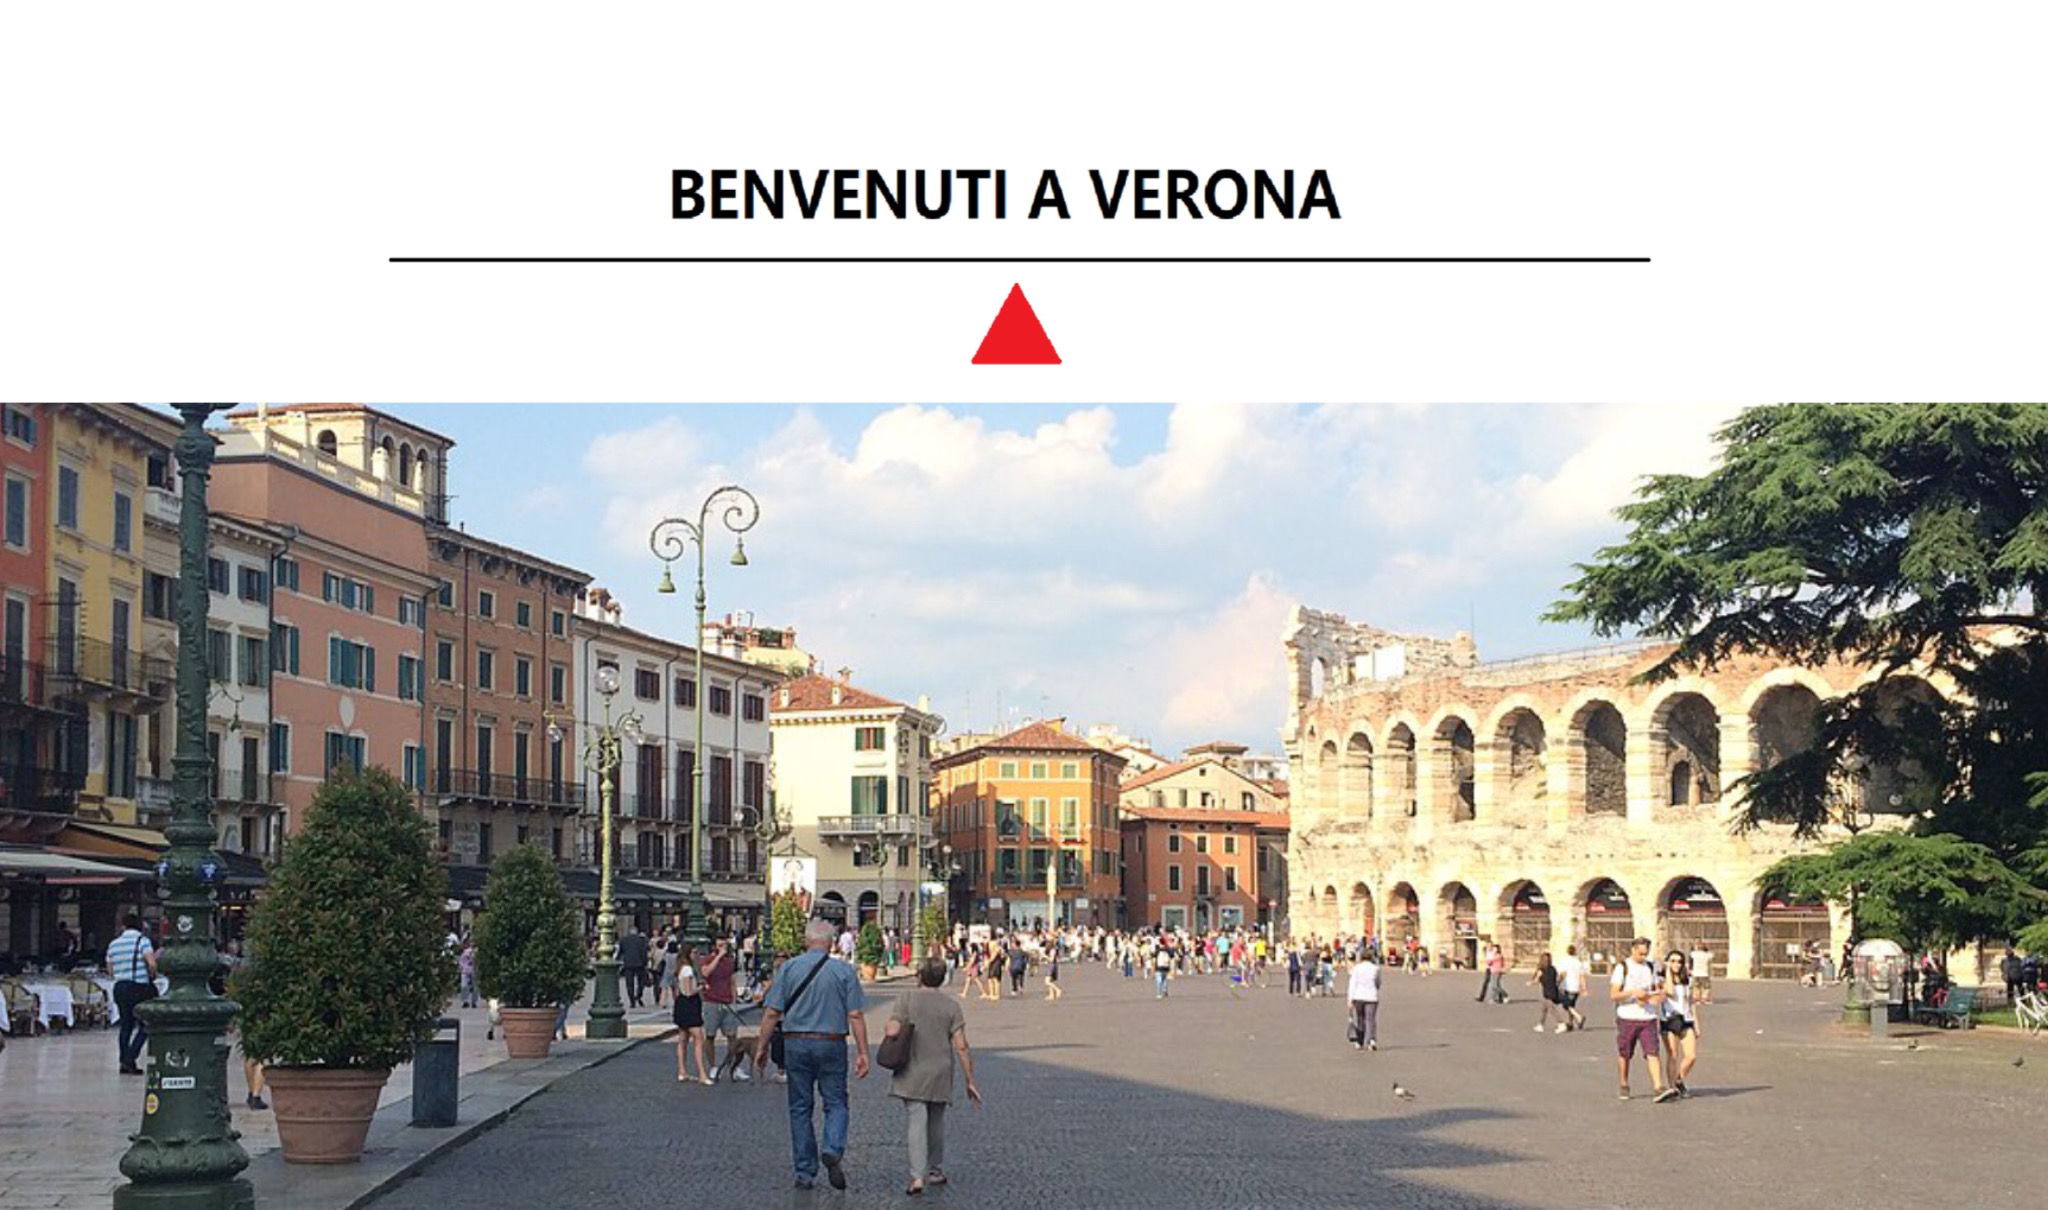 Benvenuti a Verona